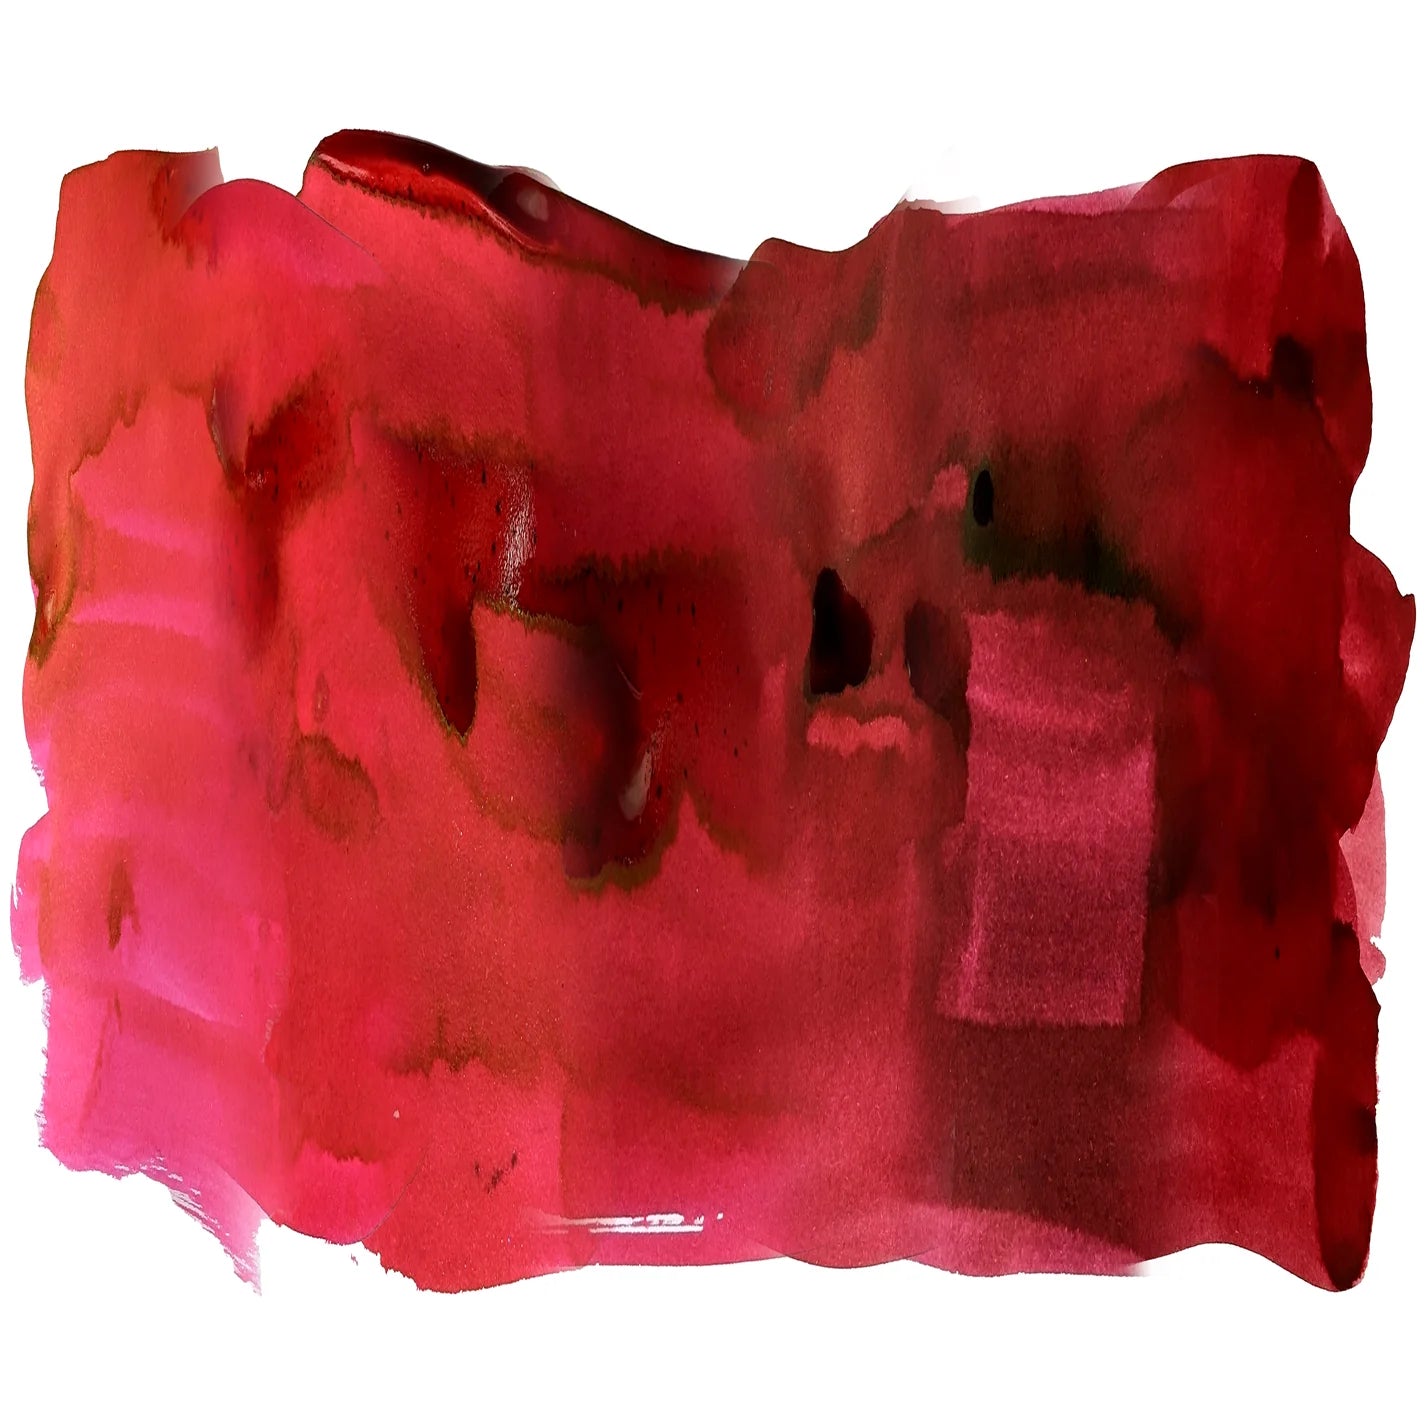 Van Dieman’s Fusion - Fountain Pen Ink Mixing Kit - The Pink Pack